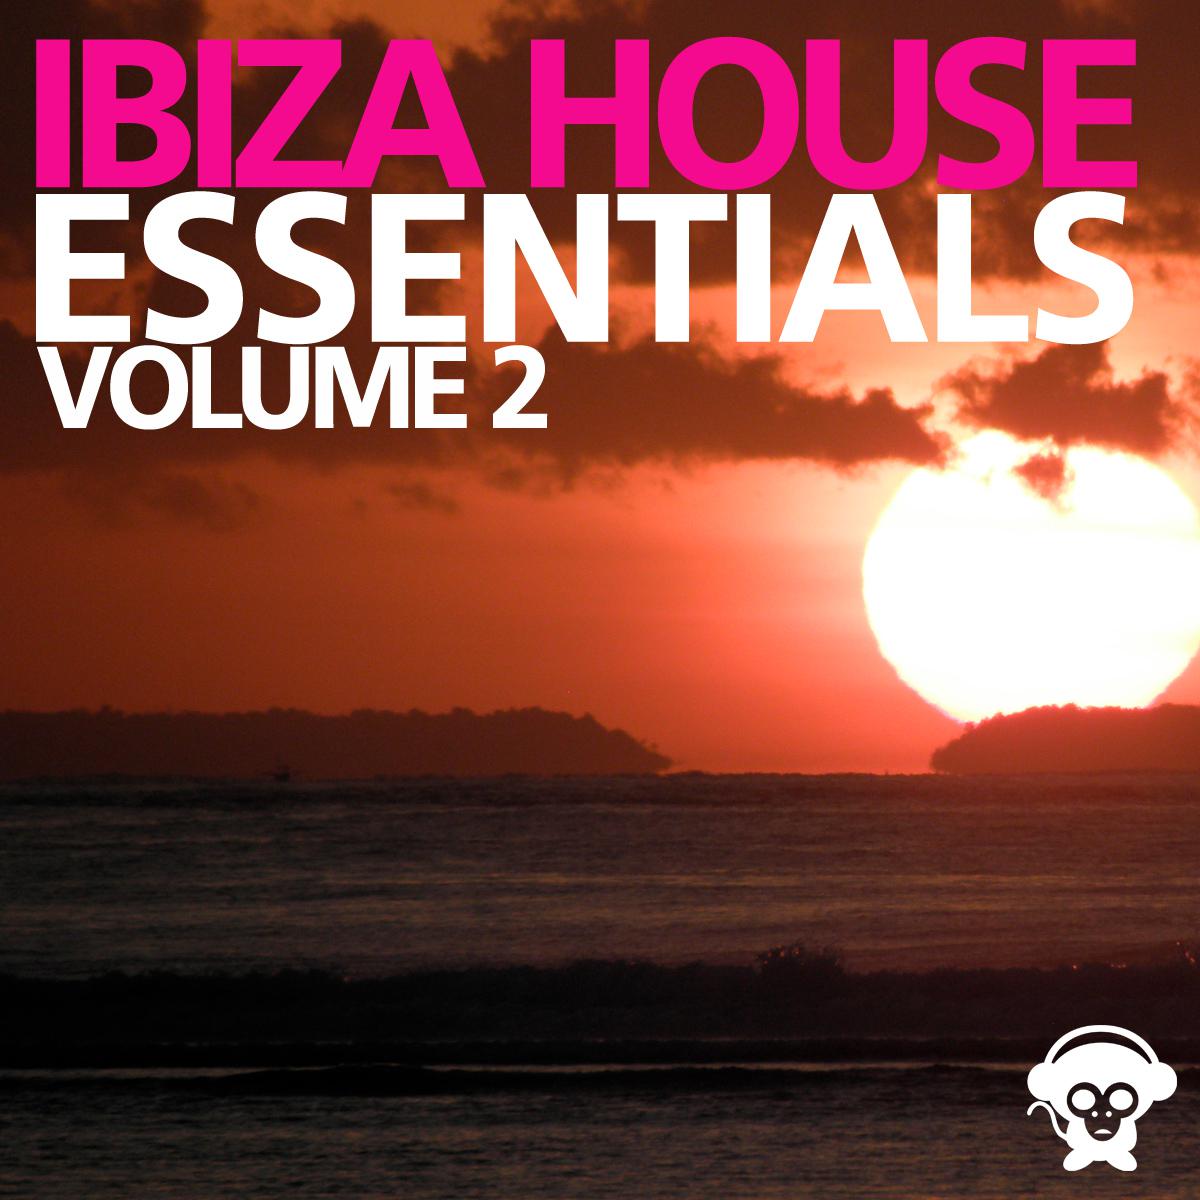 Ibiza House Essentials Volume 2